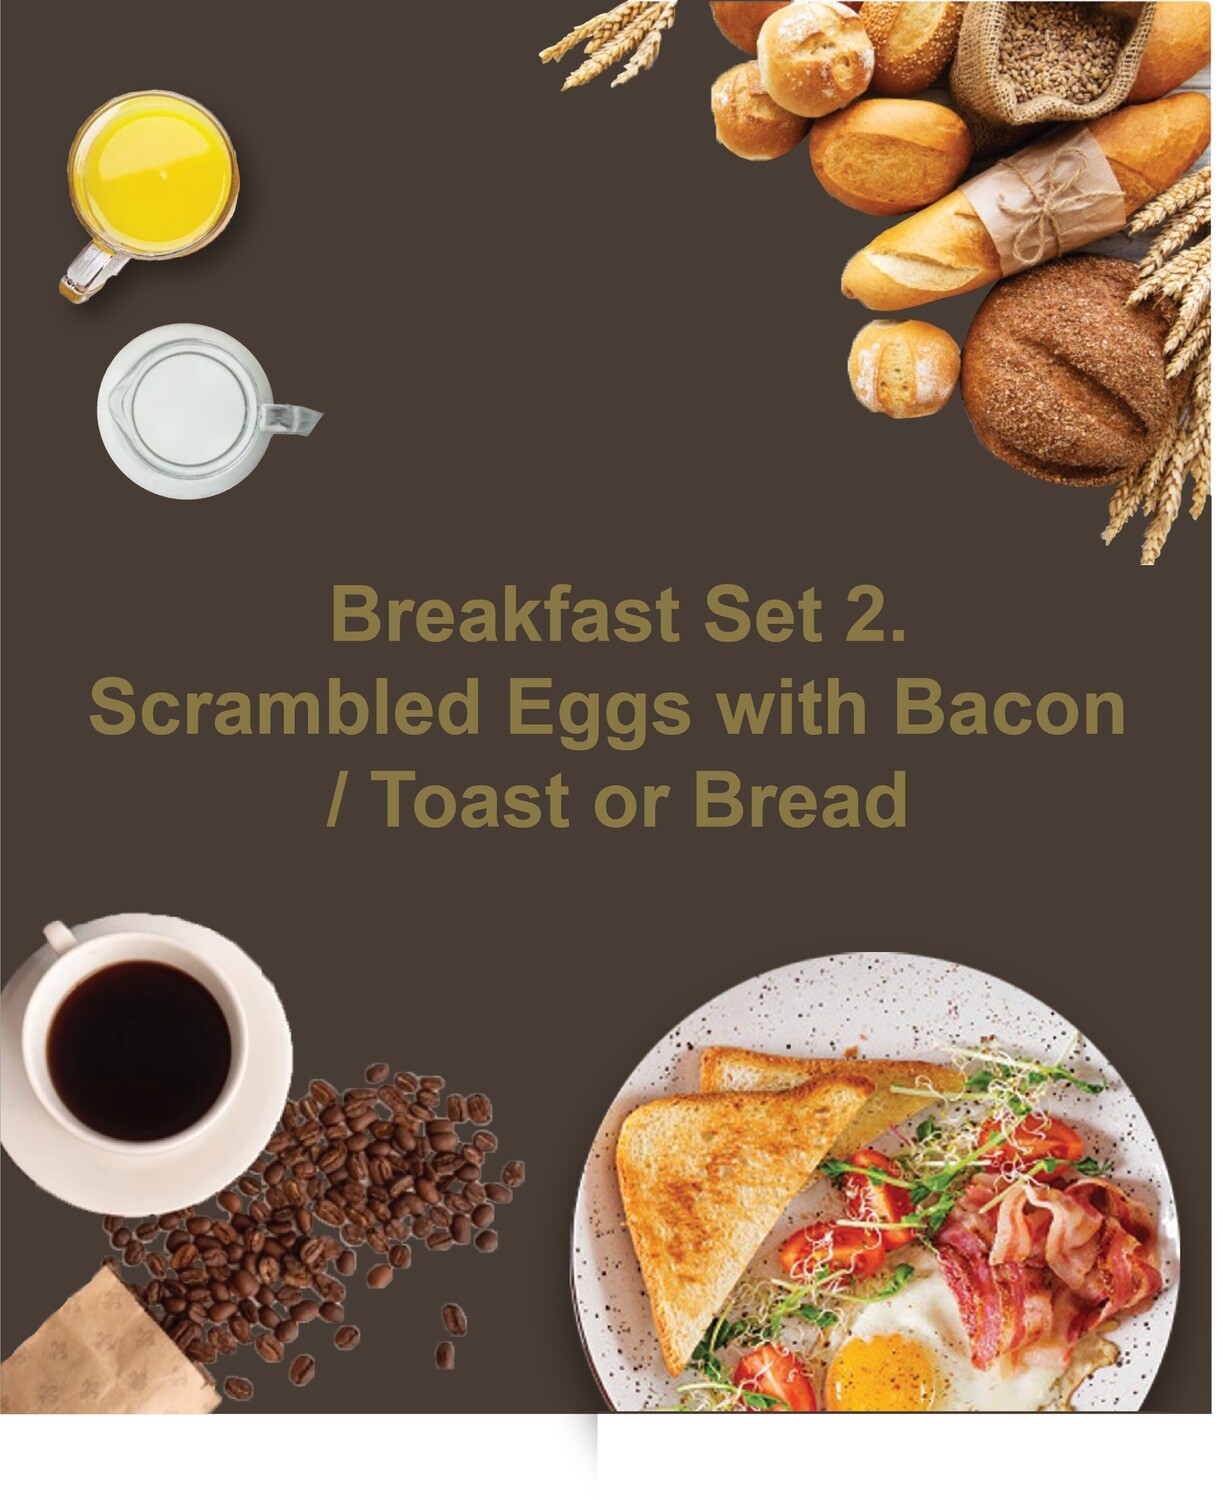 Set 2.
Scrambled Eggs with Bacon / Toast or Bread-

ชุดที่ 2
ไข่กวนเบคอน / ขนมปังปิ้ง หรือ ขนมปัง